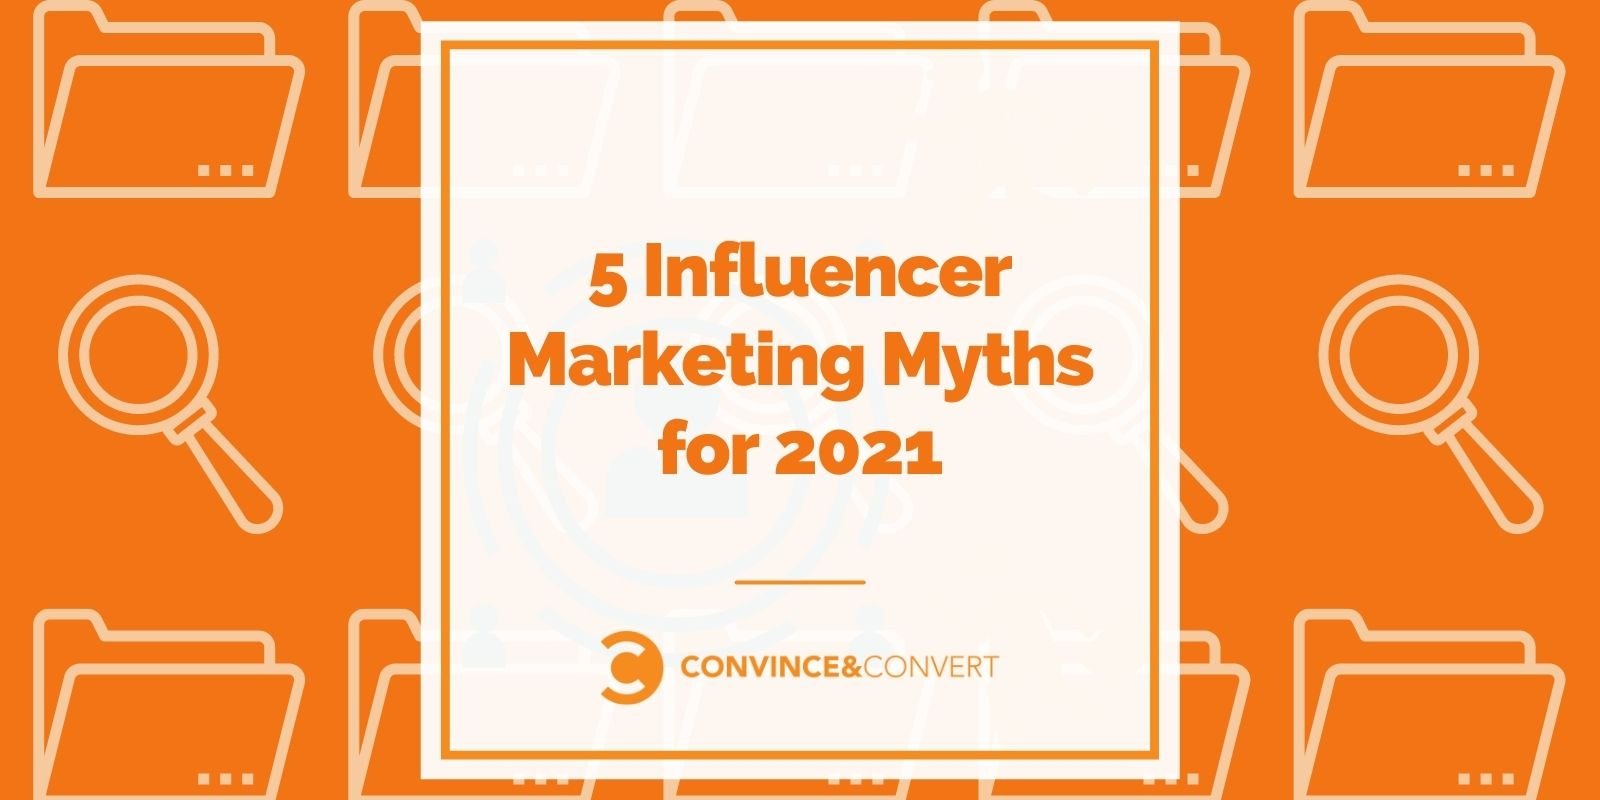 5 Influencer Marketing Myths for 2021